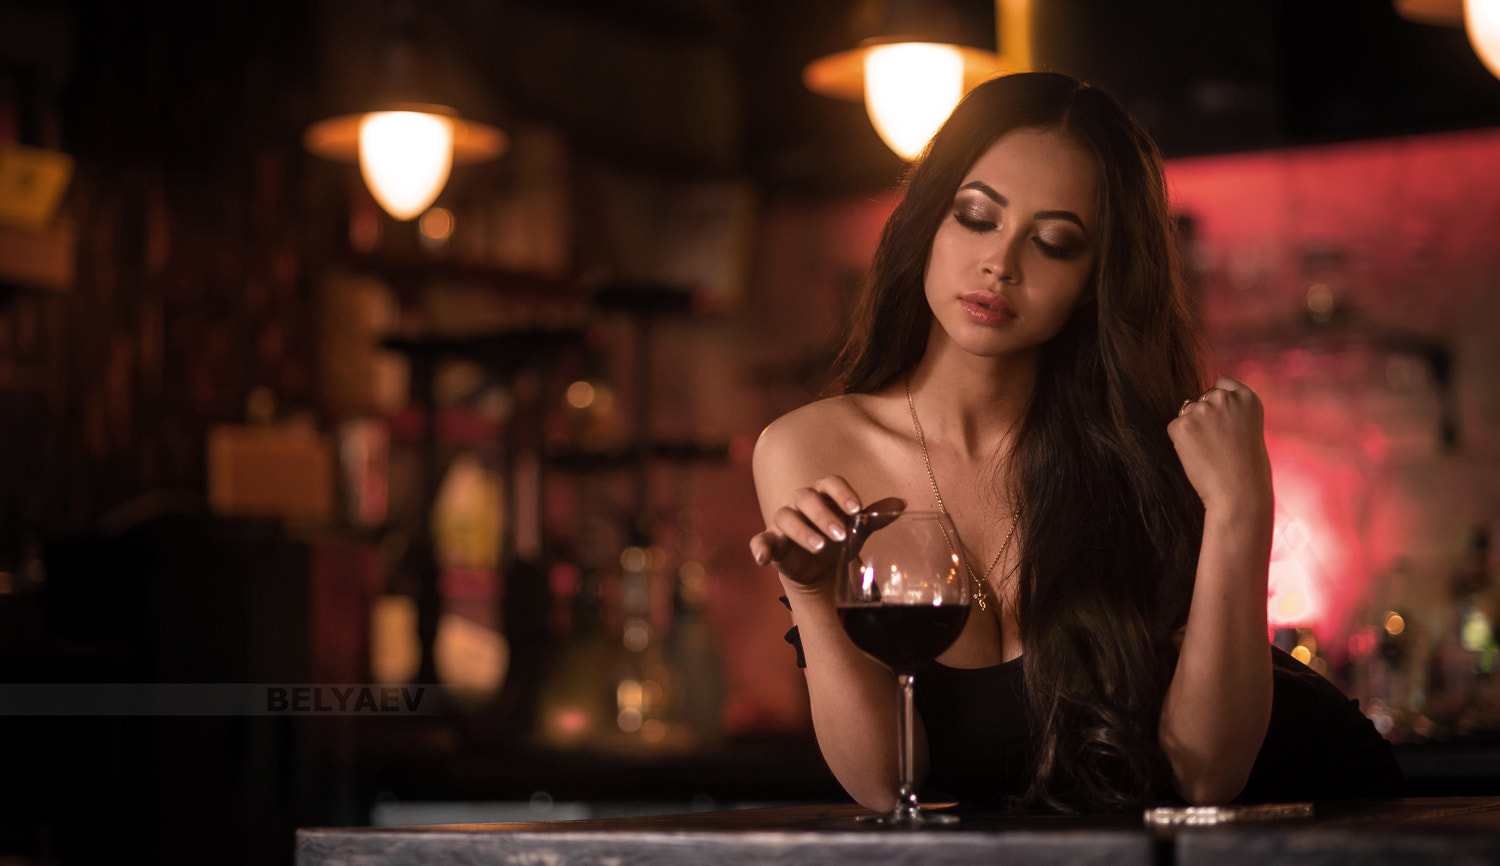 Dmitry Belyaev Women Brunette Long Hair Makeup Jewelry Necklace Dress Bare Shoulders Black Clothing 1500x866